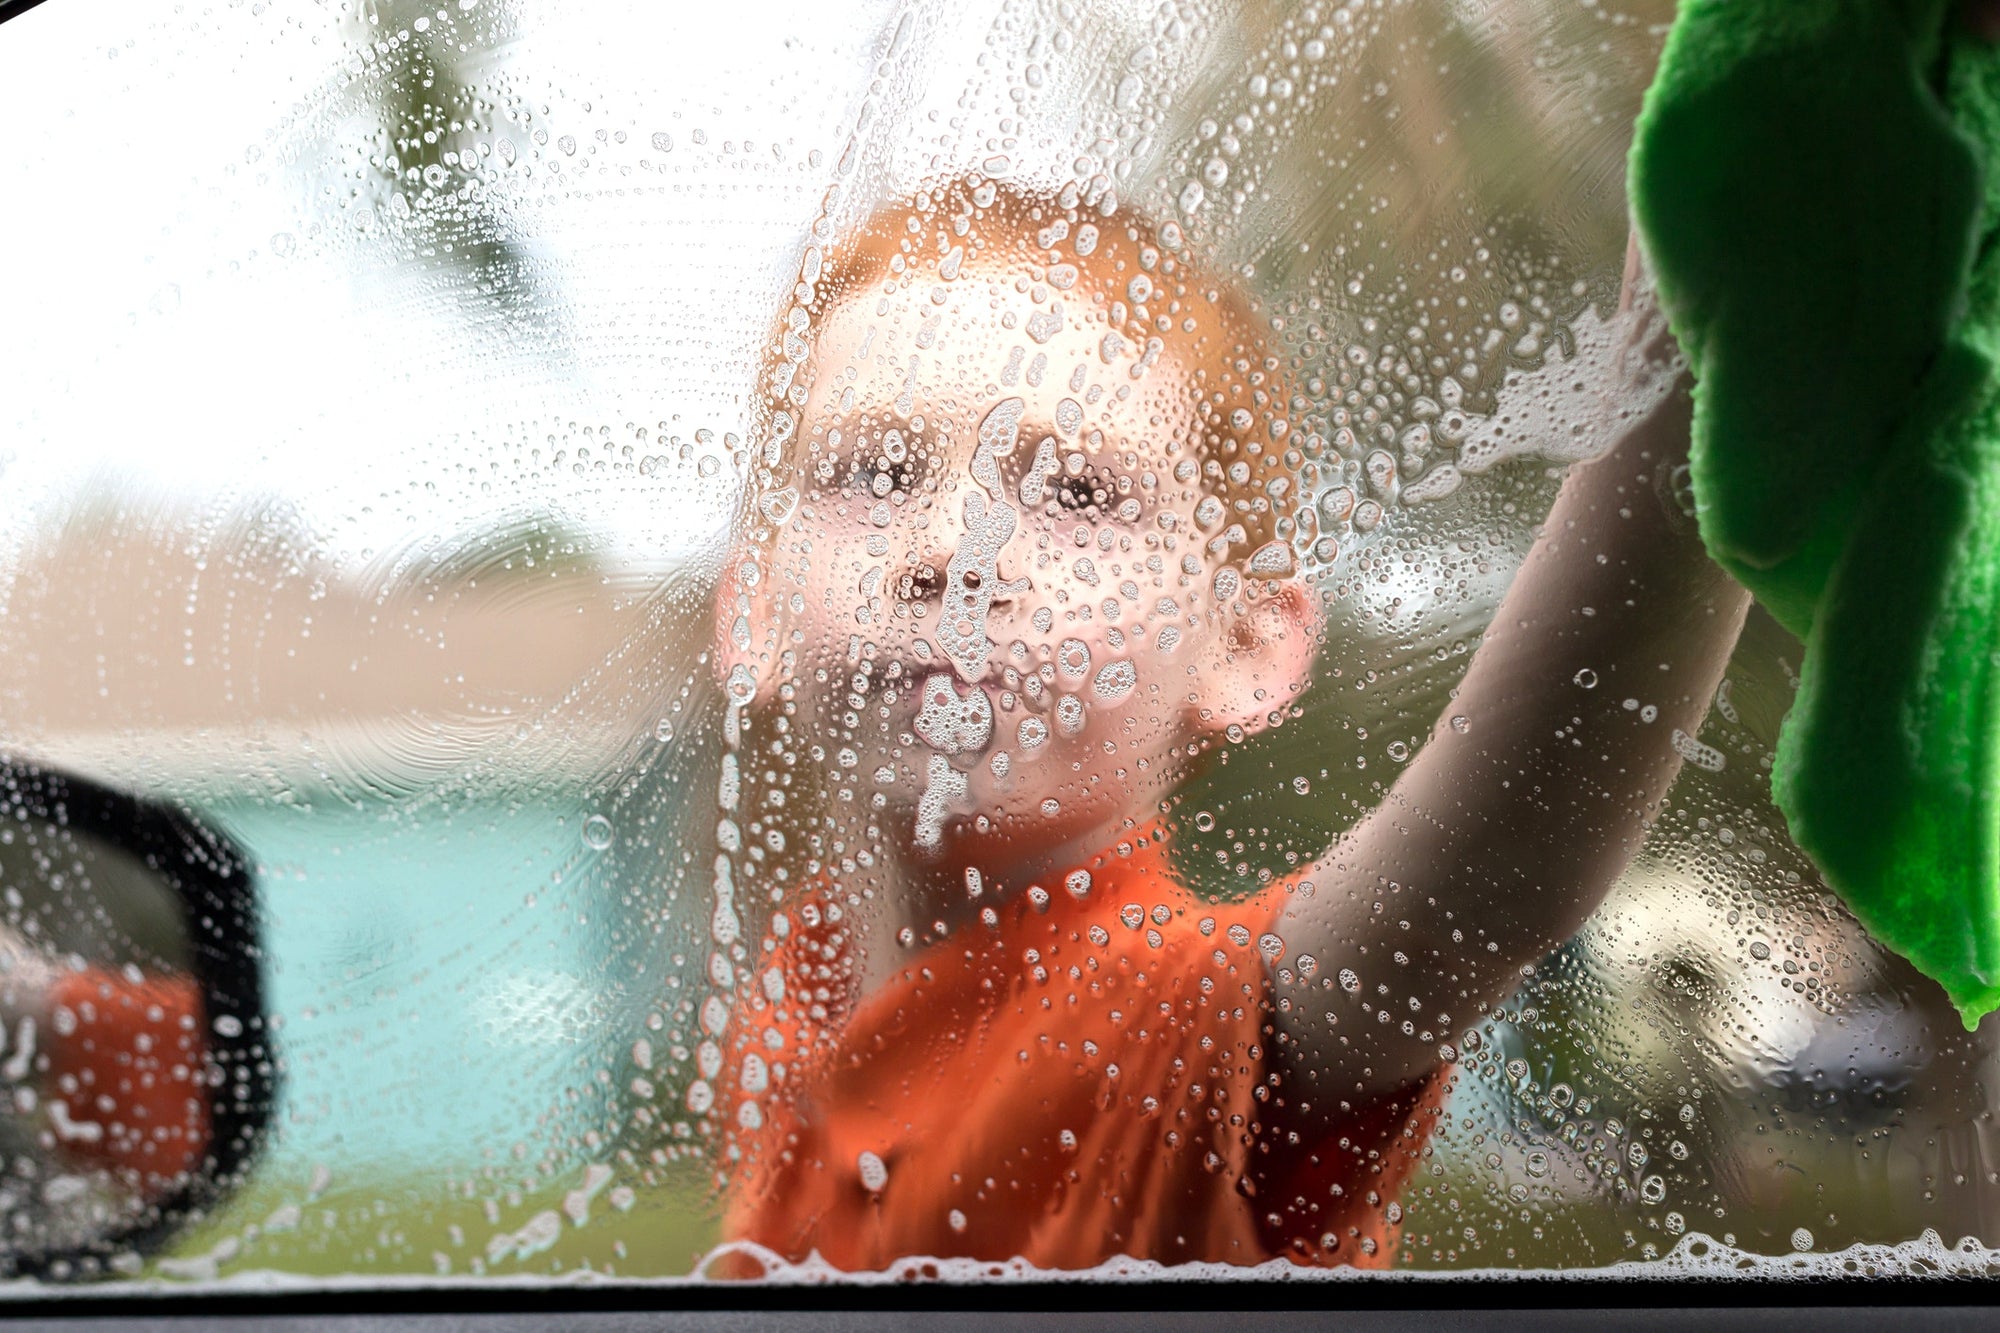 A child washing a car's window